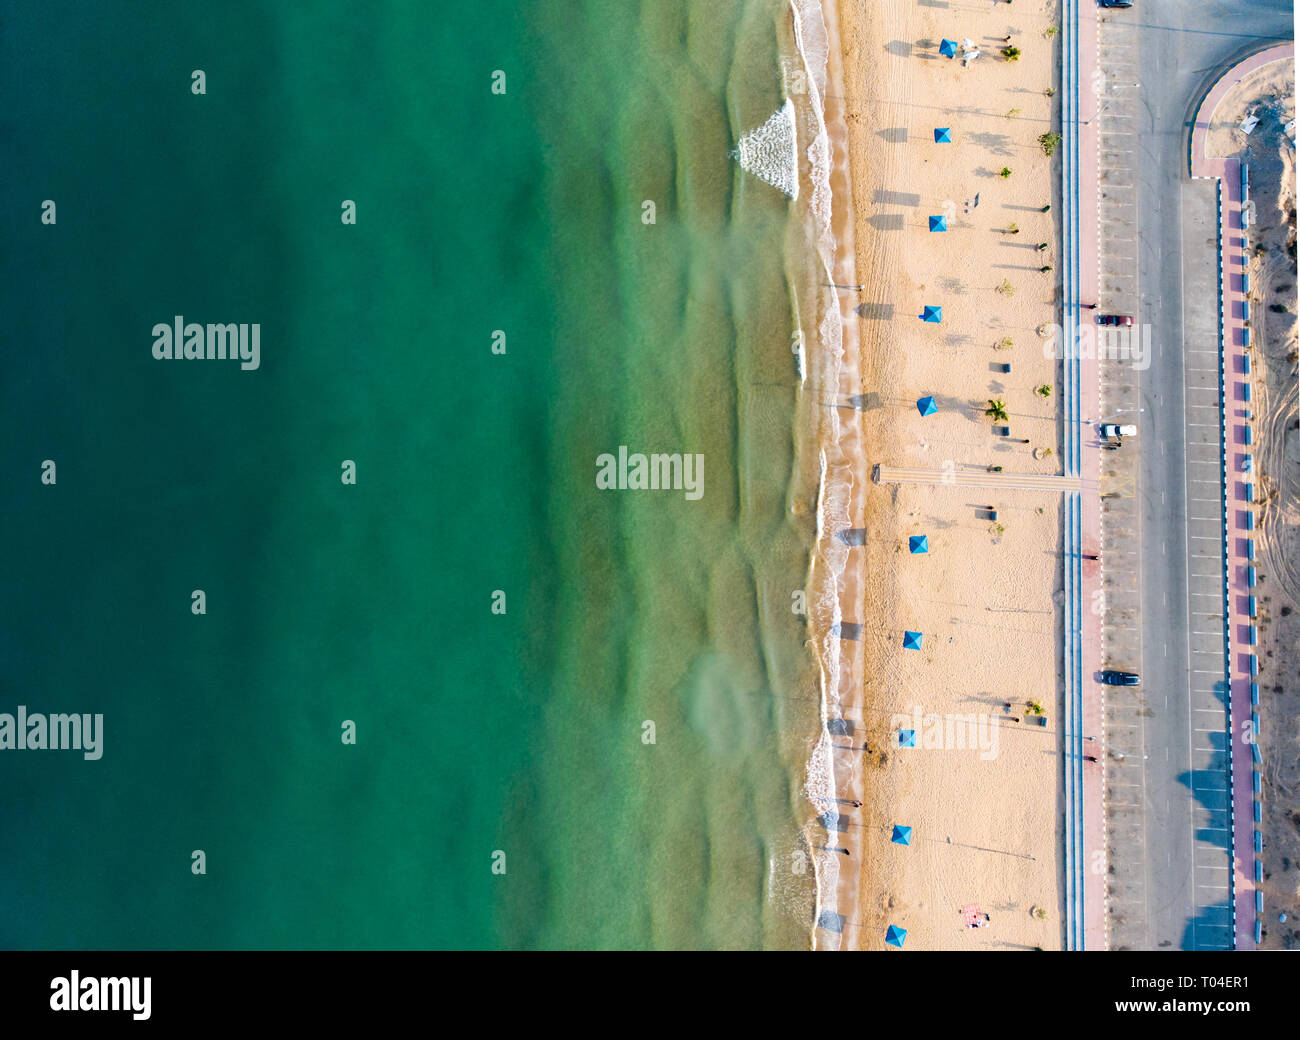 Aerial view at Flamingo beach in Ras Al Khaimah emirate of United Arab Emirates Stock Photo